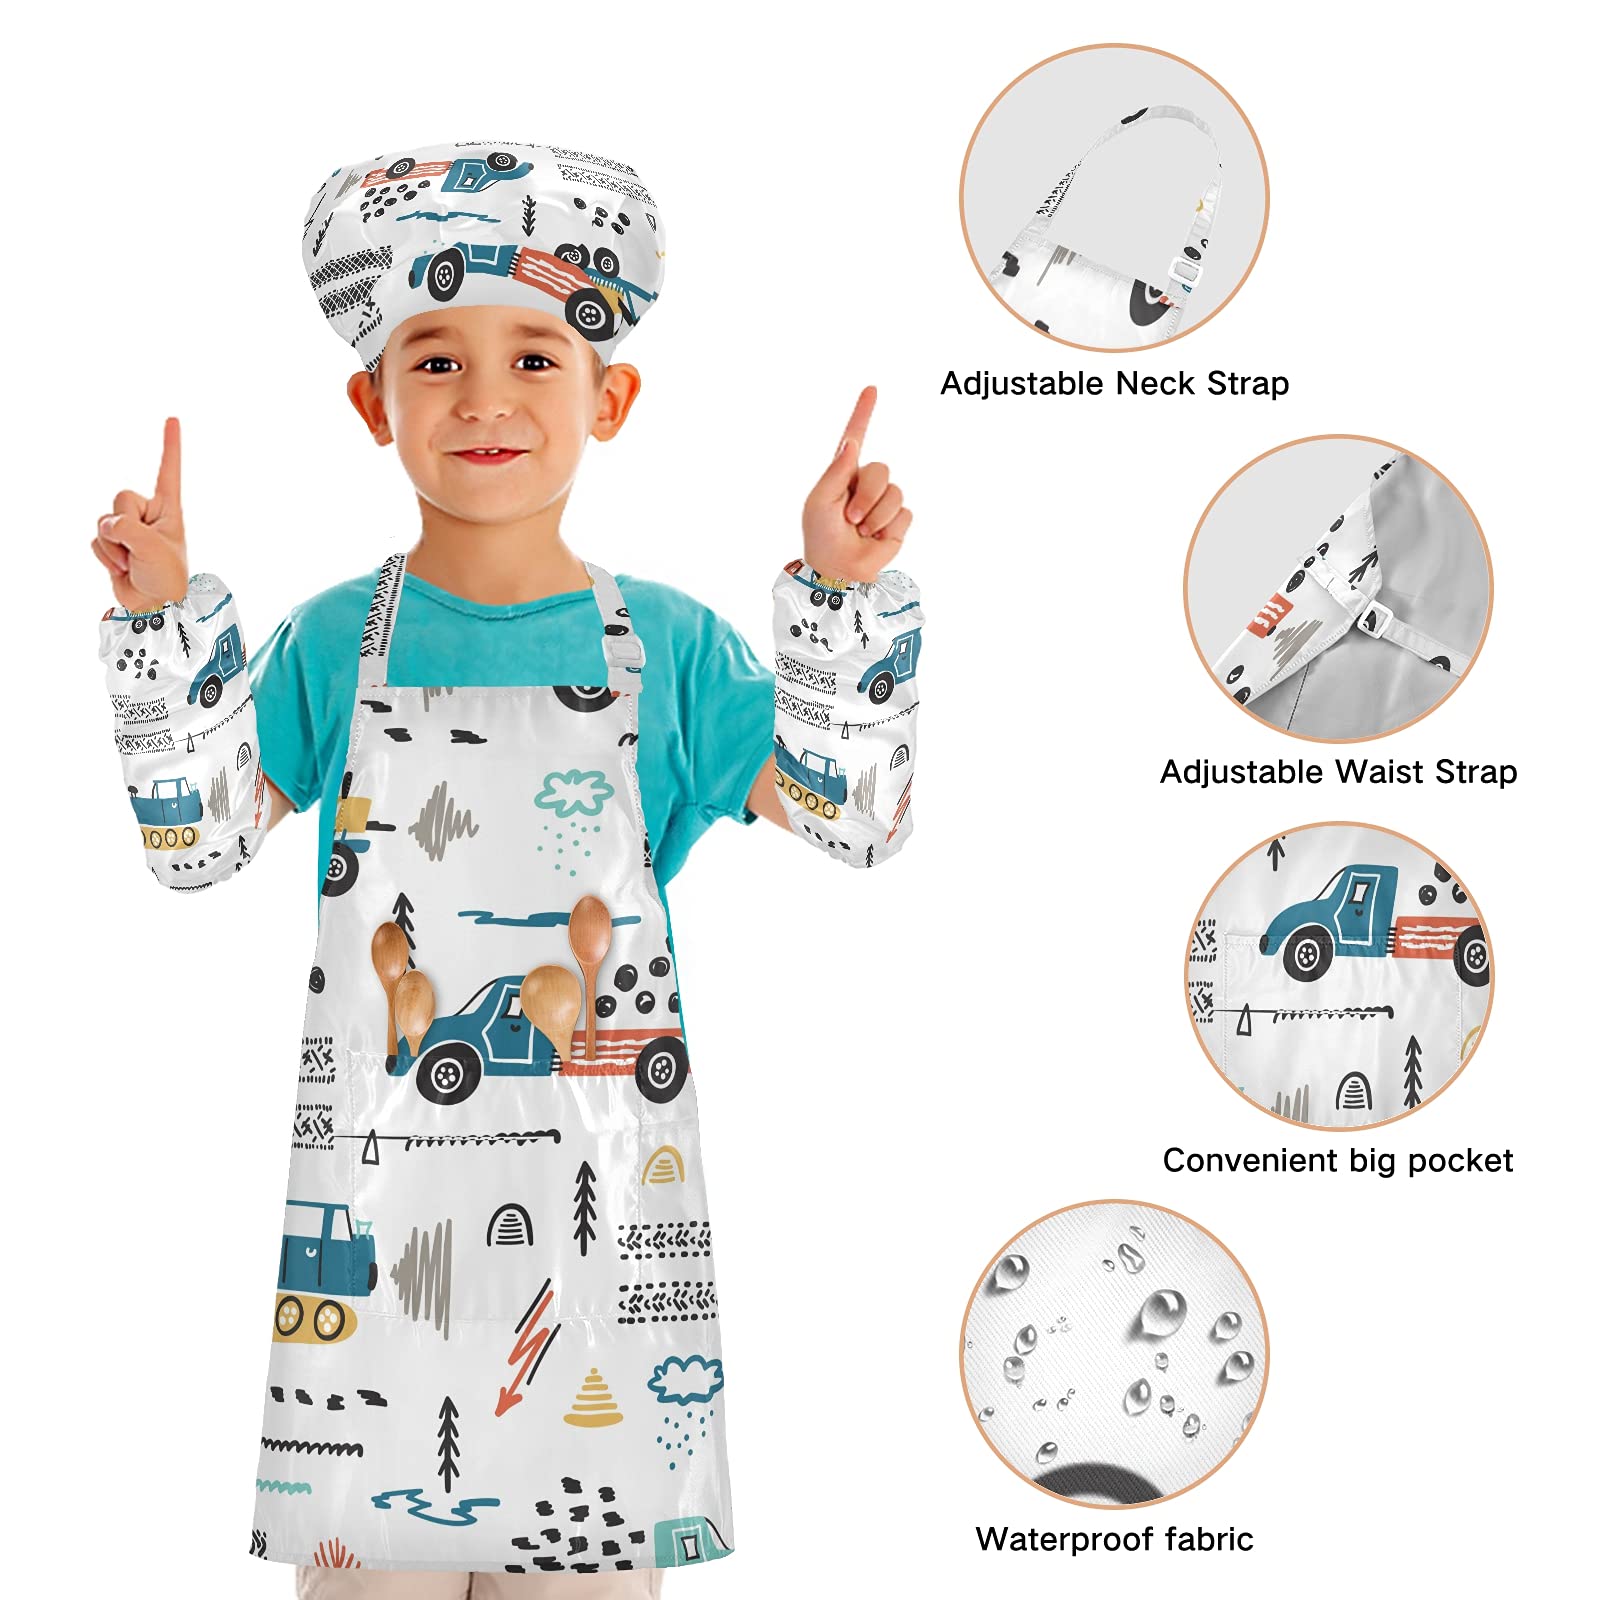 innewgogo Kids Apron Chef Hat Set Child Aprons Girls Boys Kitchen Bib Apron set